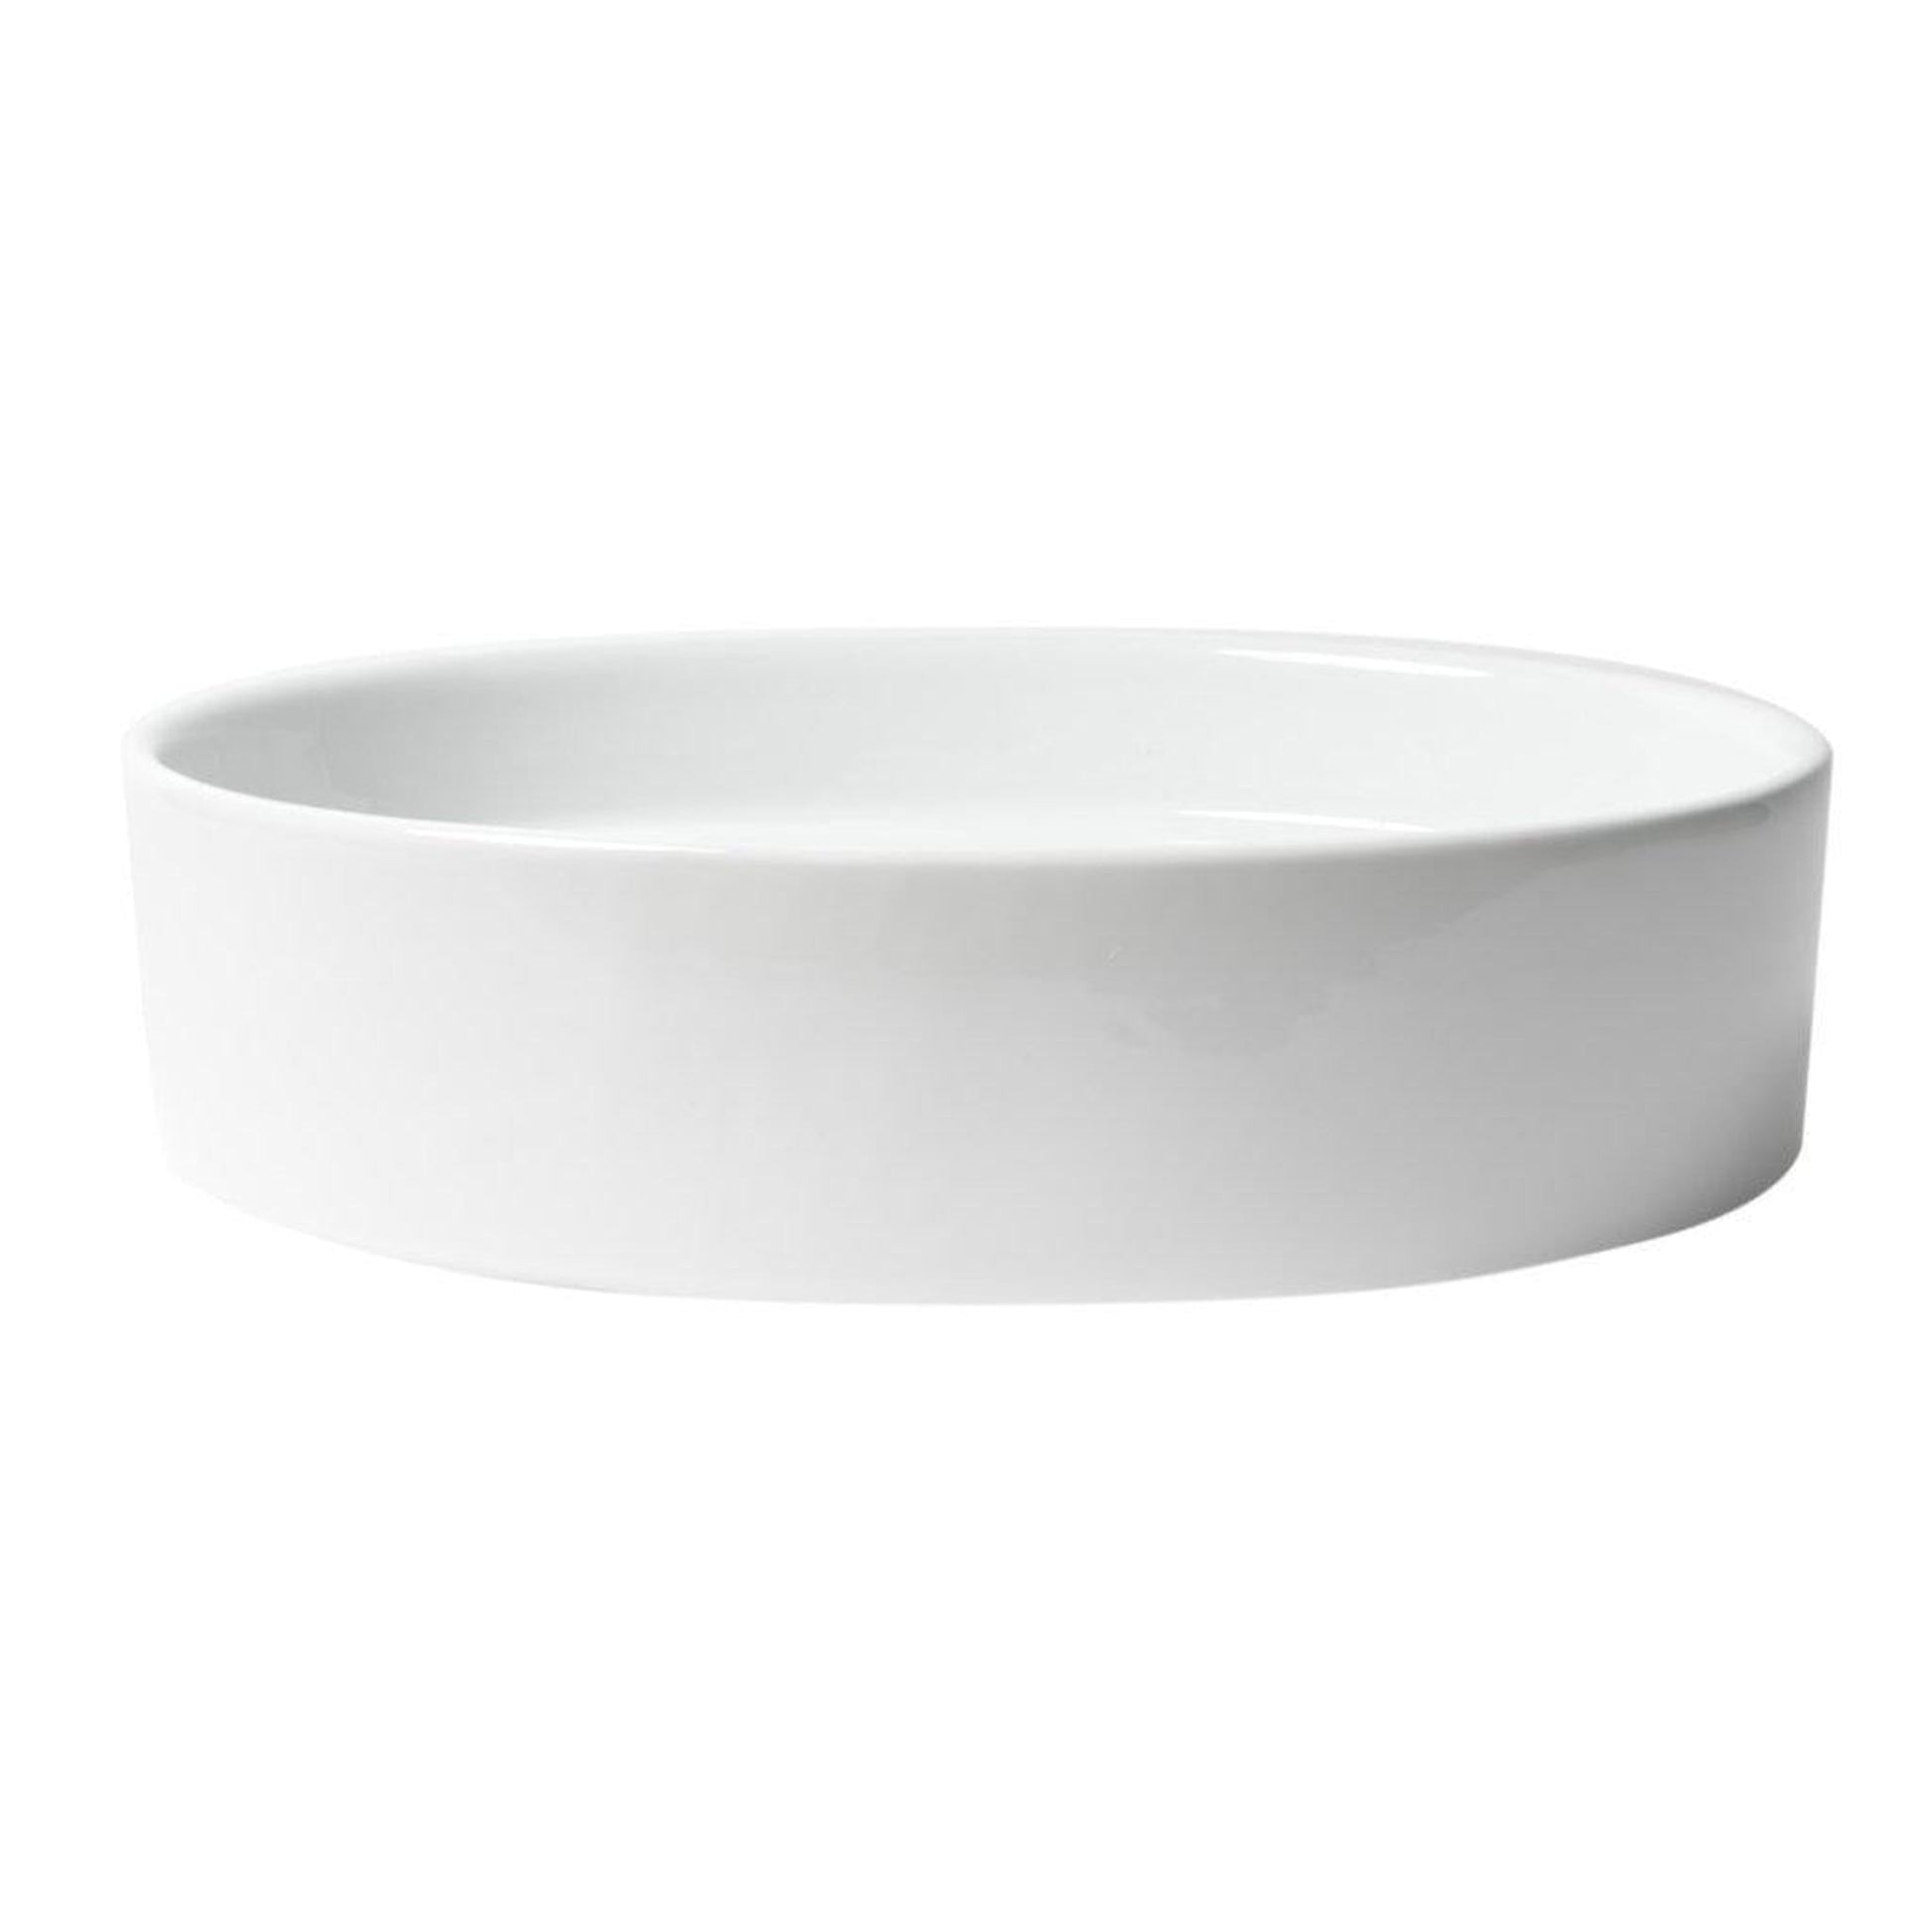 ALFI Brand ABC911 22" White Above Mount Oval Ceramic Bathroom Sink